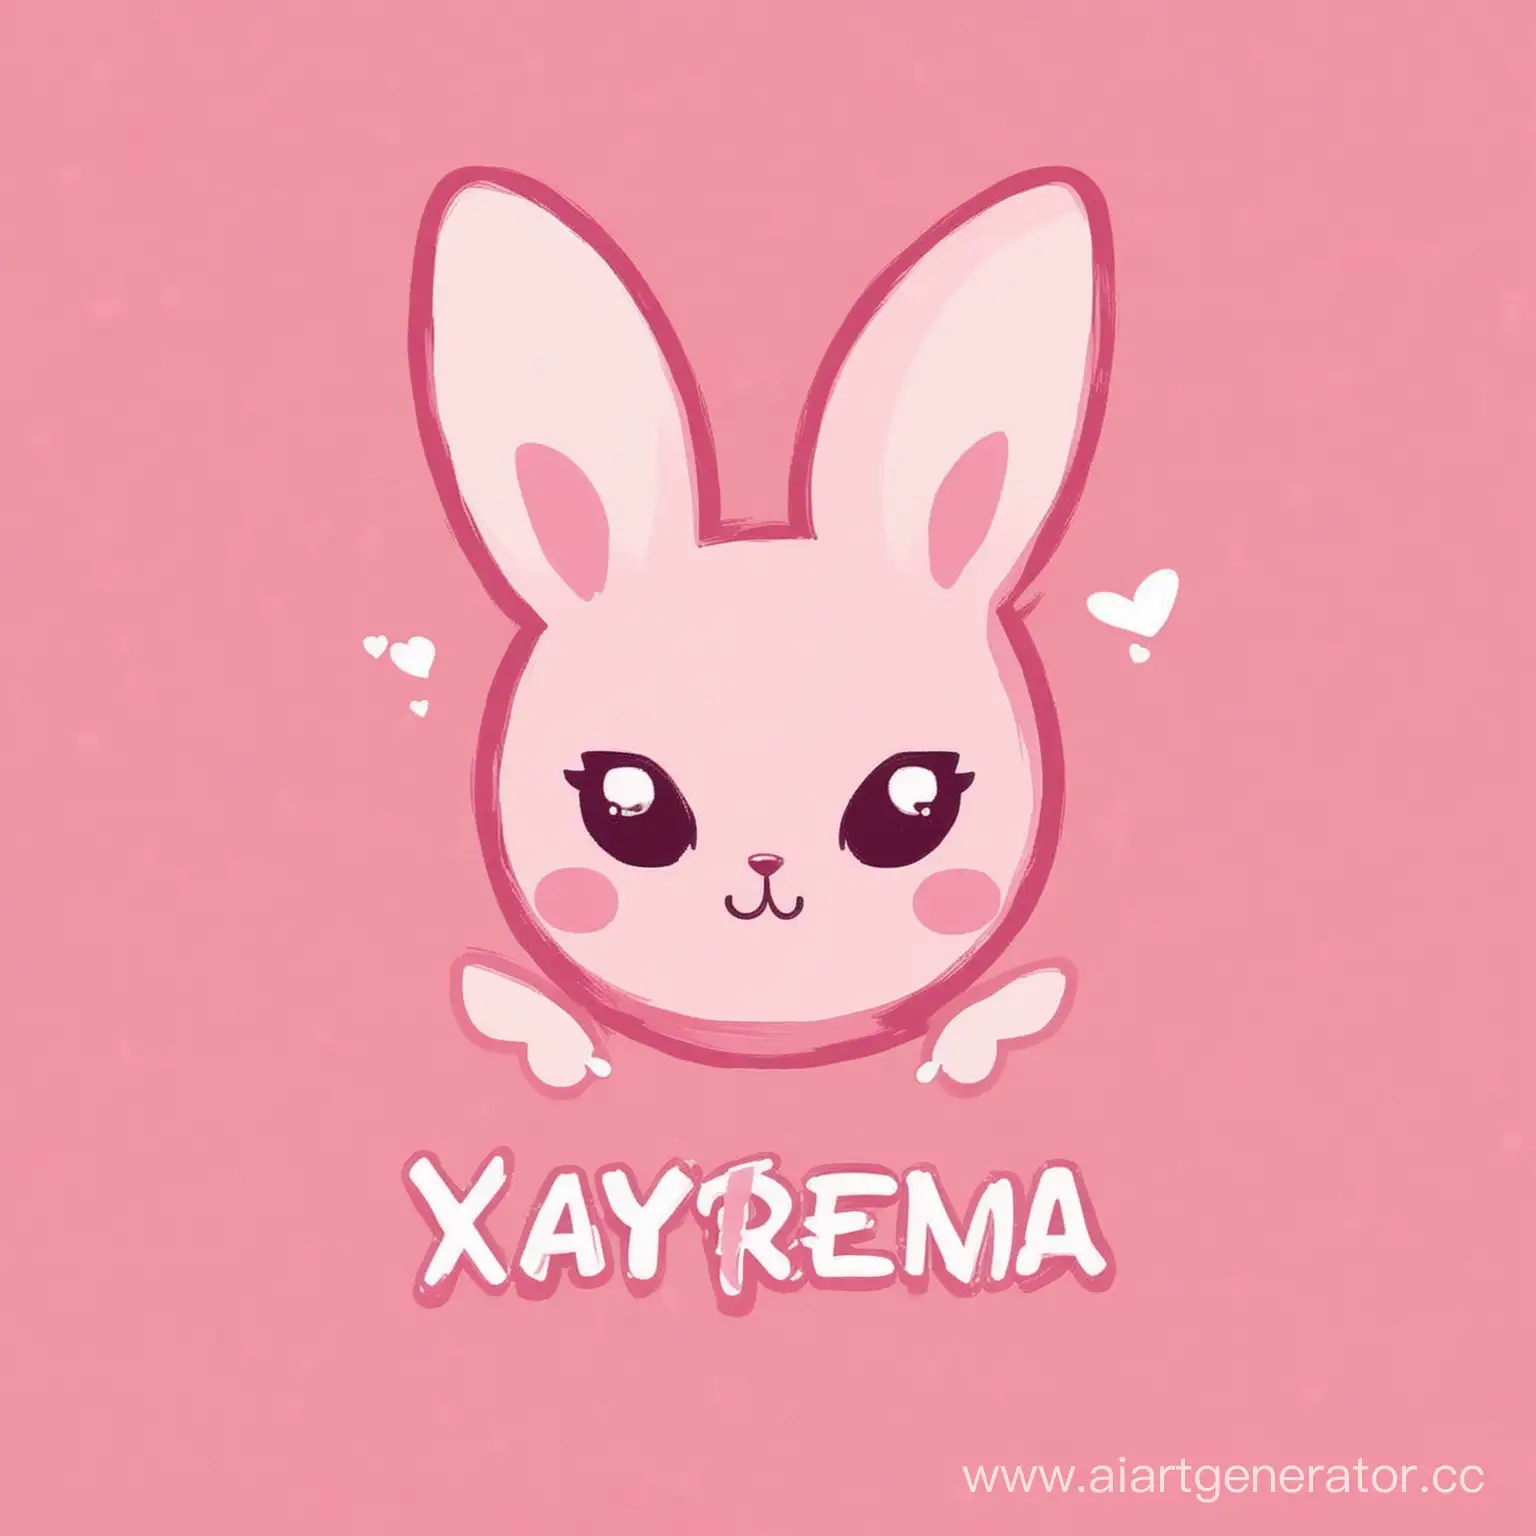 Minimalist-Pink-Anime-Style-Logo-with-Xayreena-Famq-Name-and-Bunny